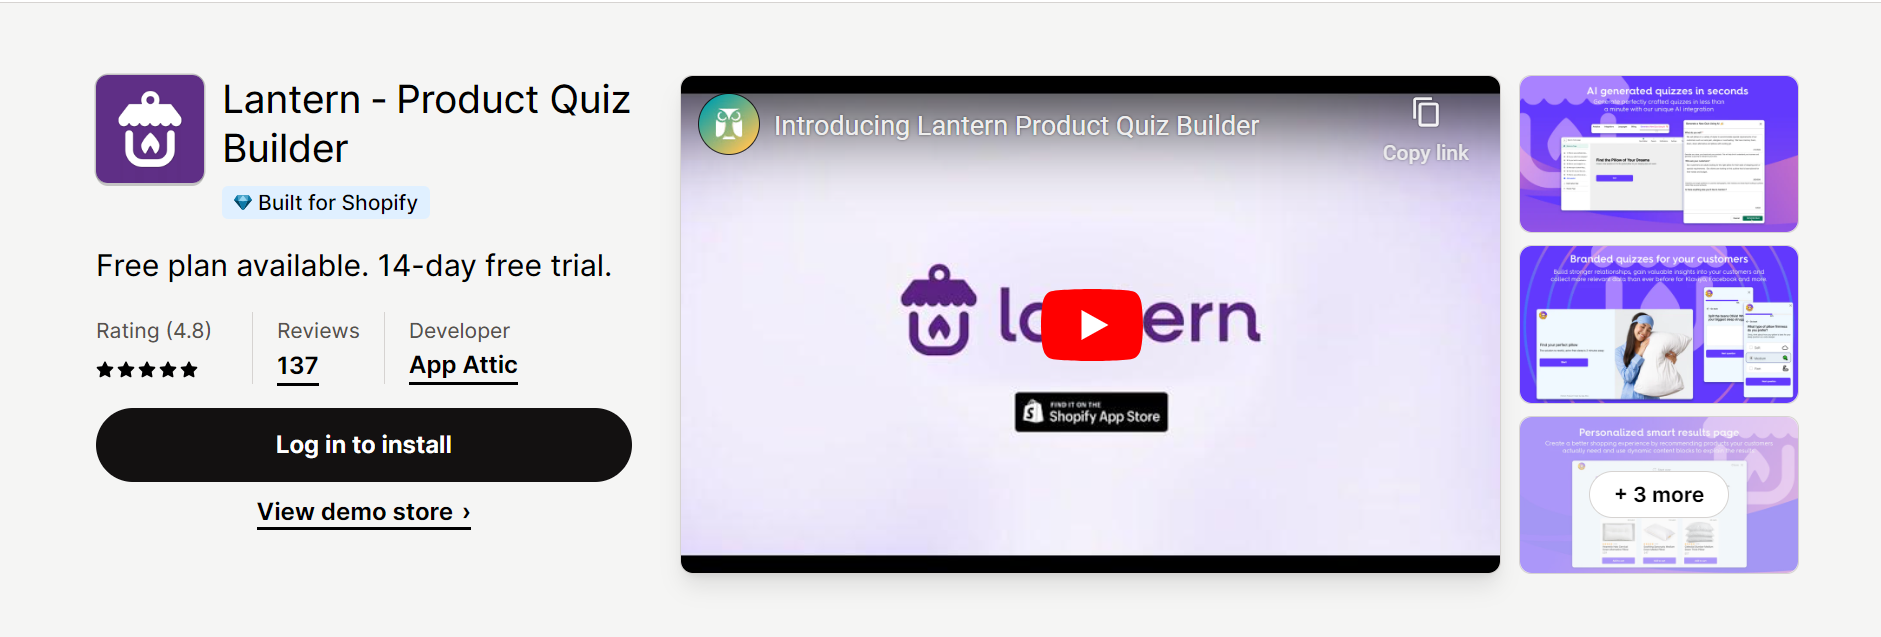 Lantern ‑ Product Quiz Builder